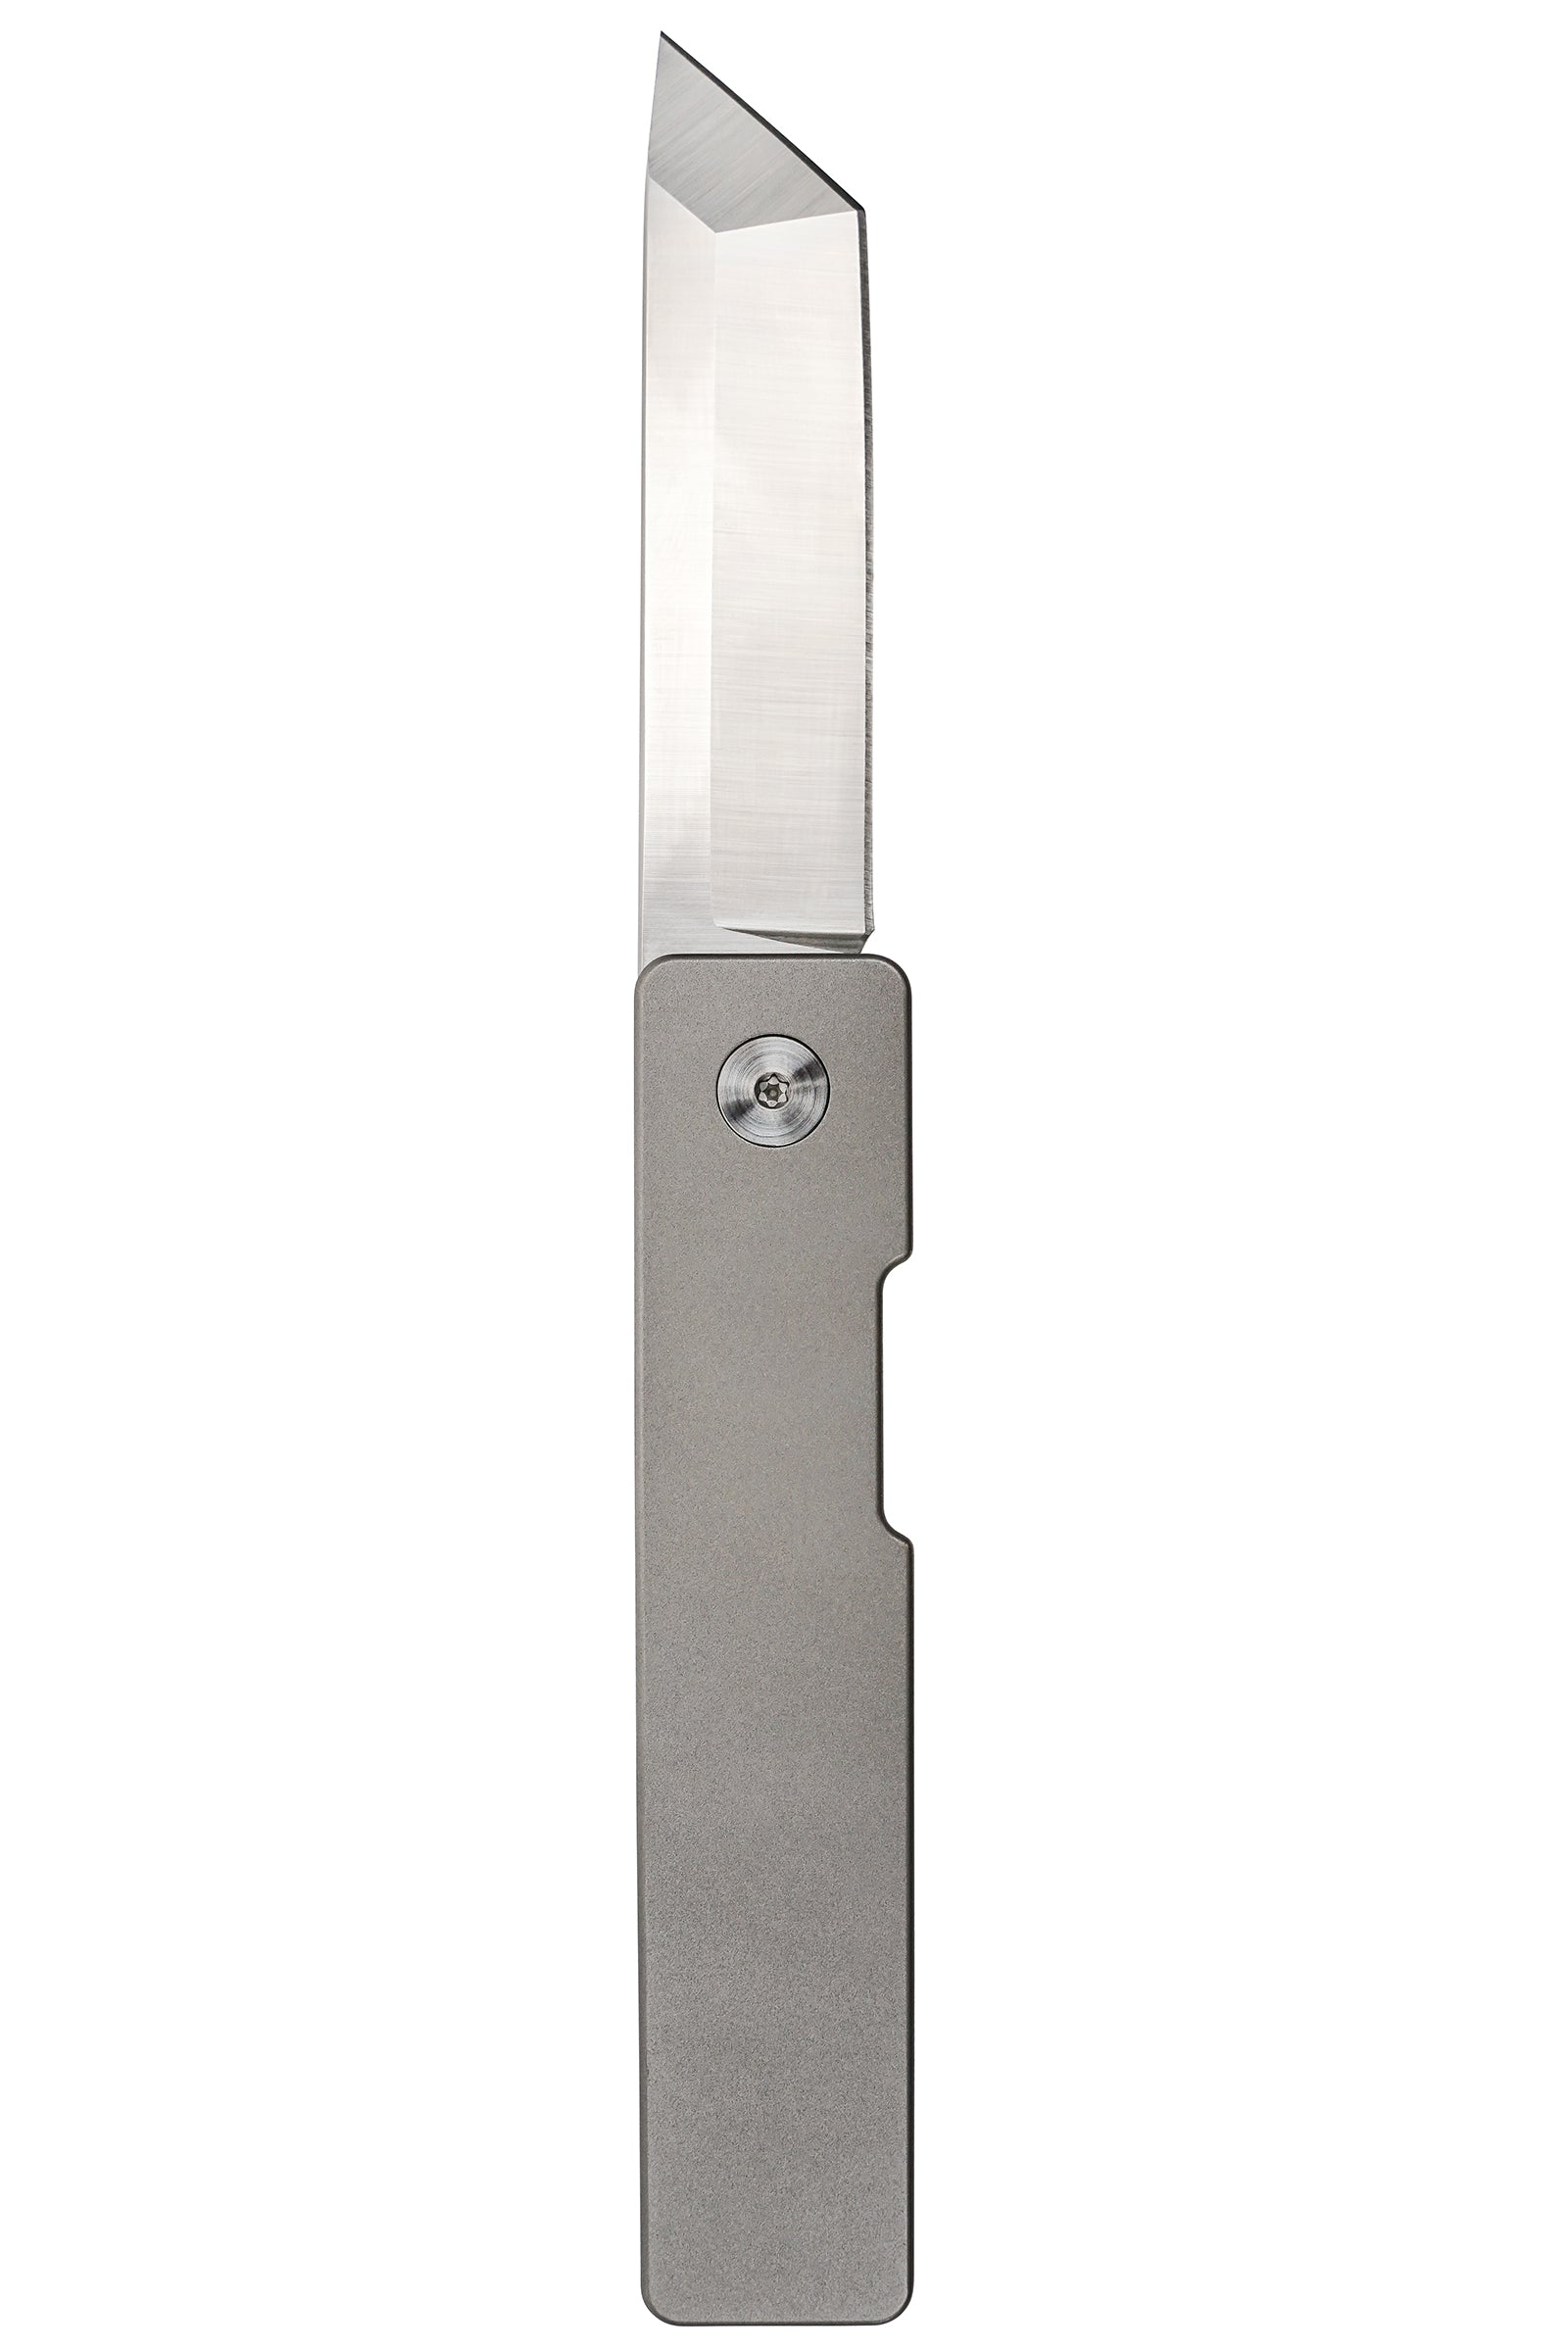 Chicago Cutlery Magnasharp Magnetic Mouse Knife Sharpener, World  Kitchen,1054511